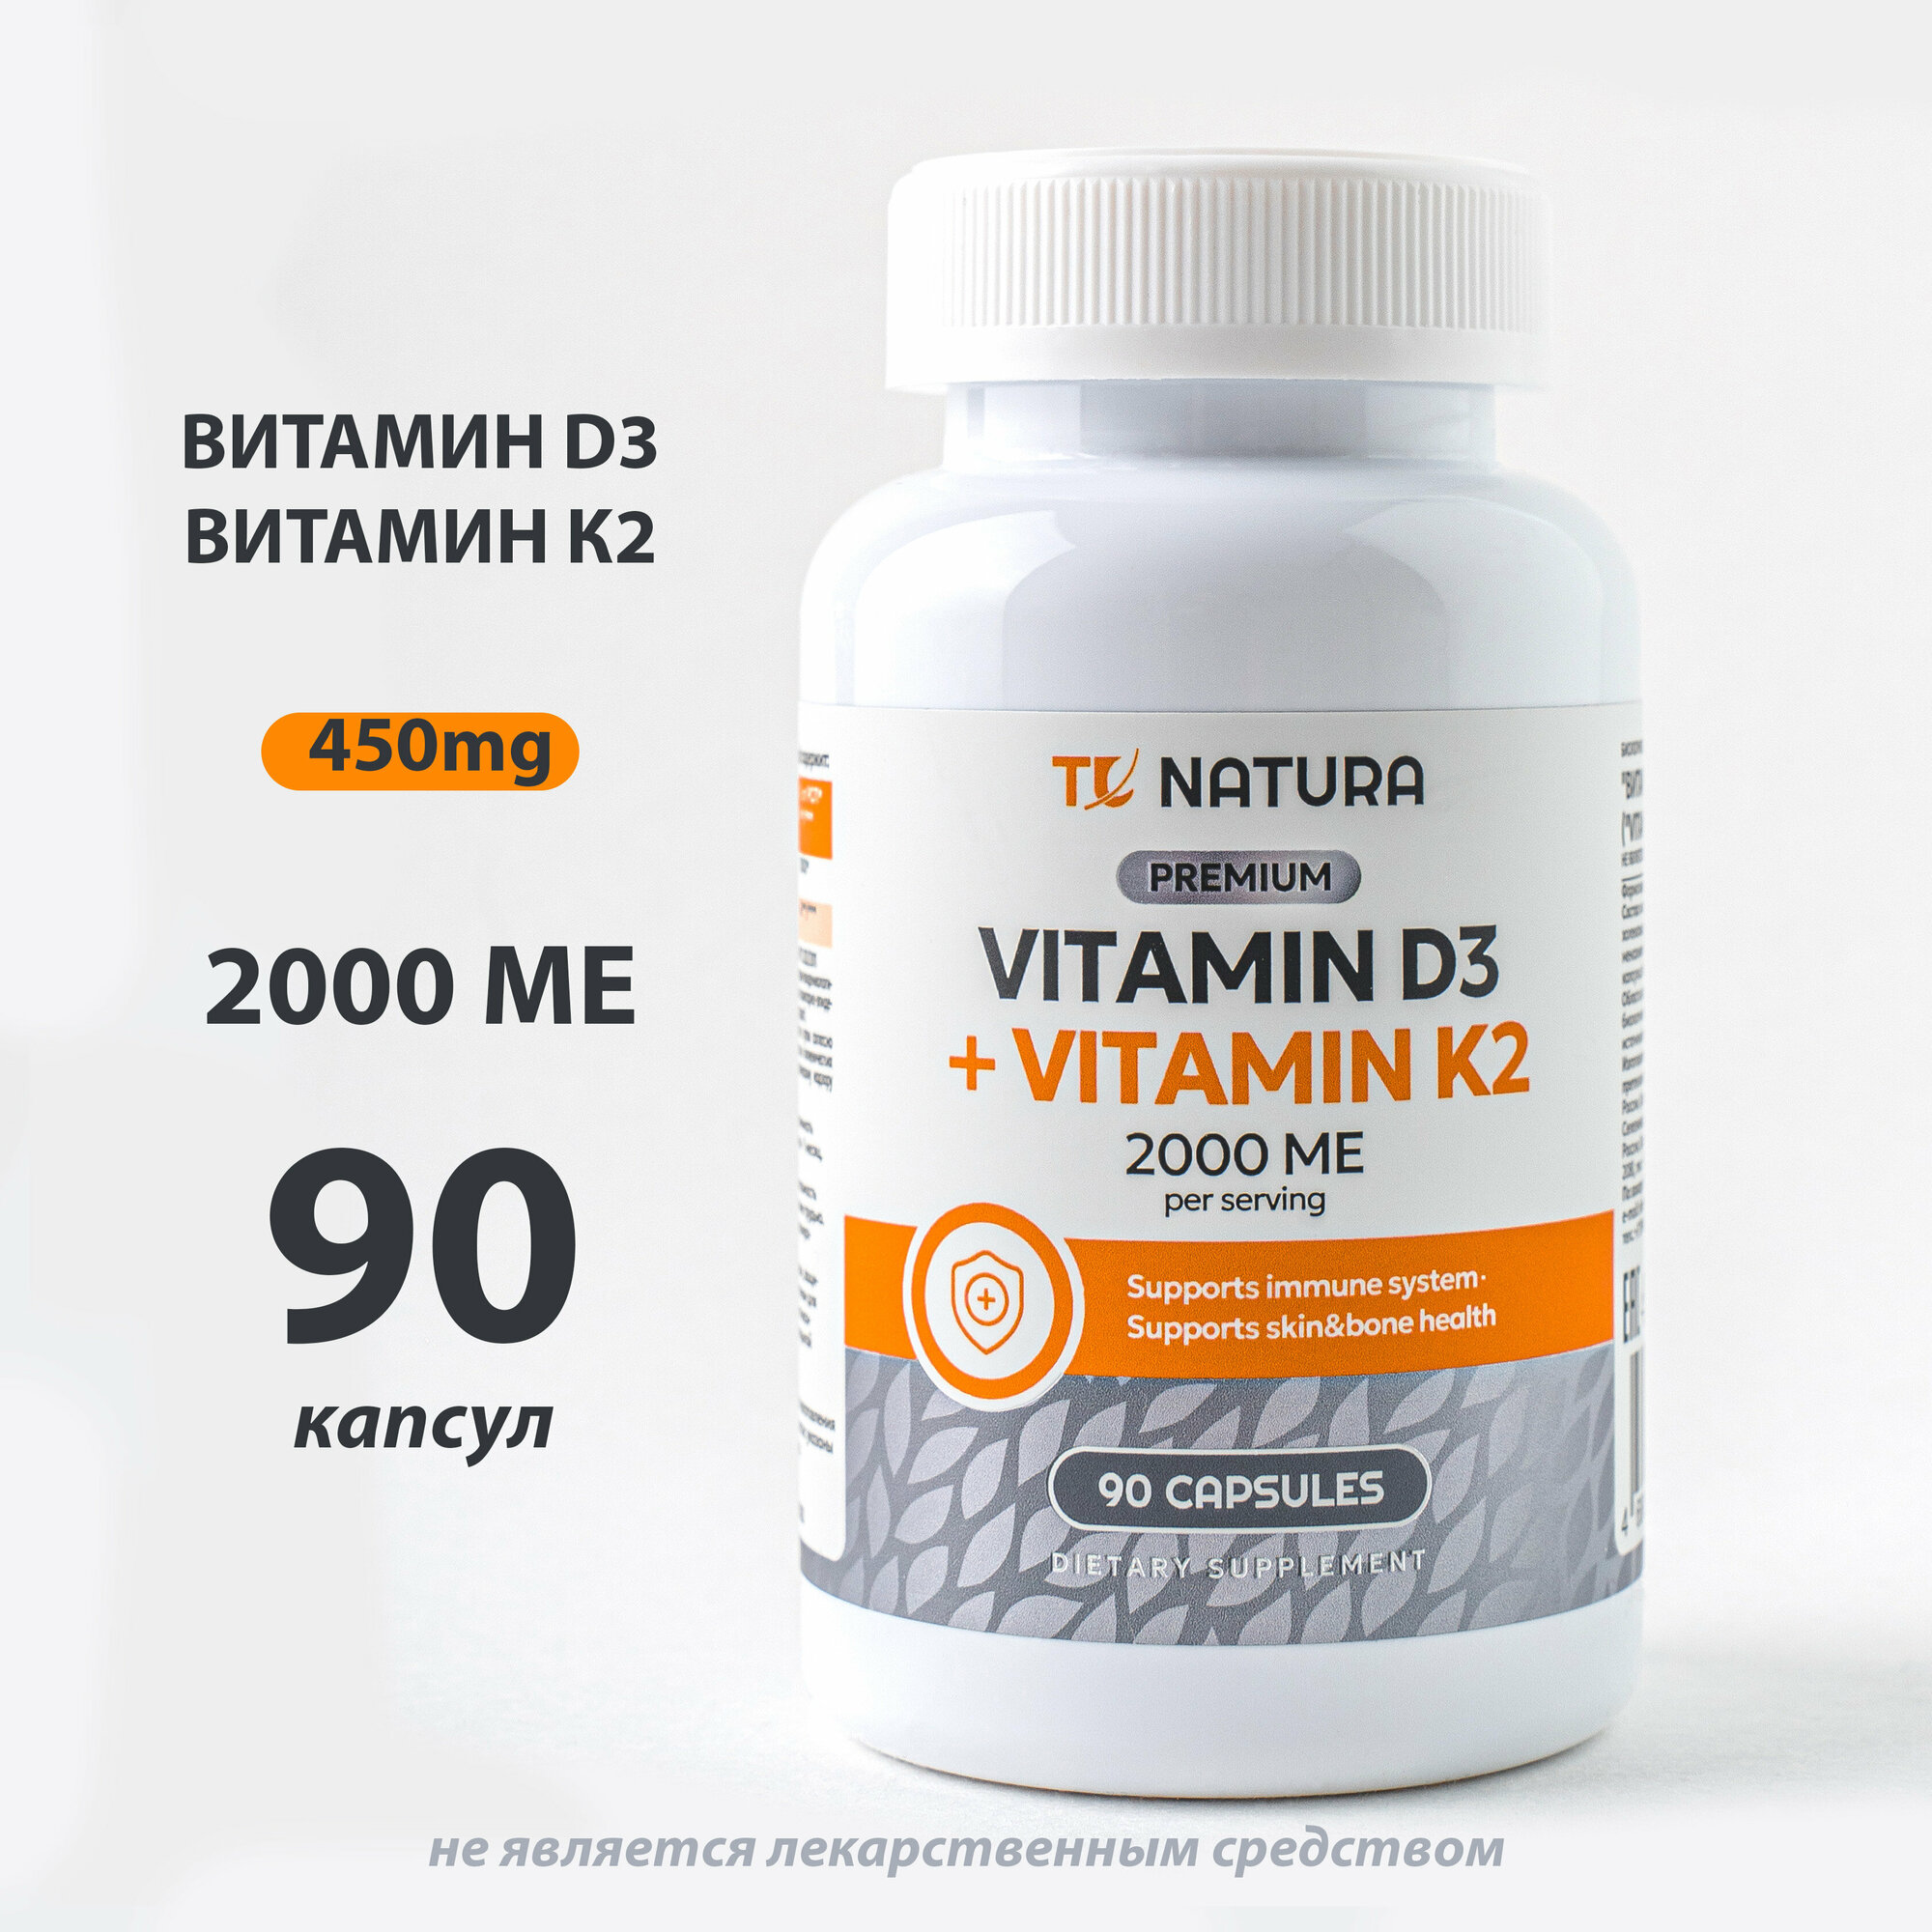 Витамины "D3 + K2" от TU NATURA, 90 капсул аналог Solgar